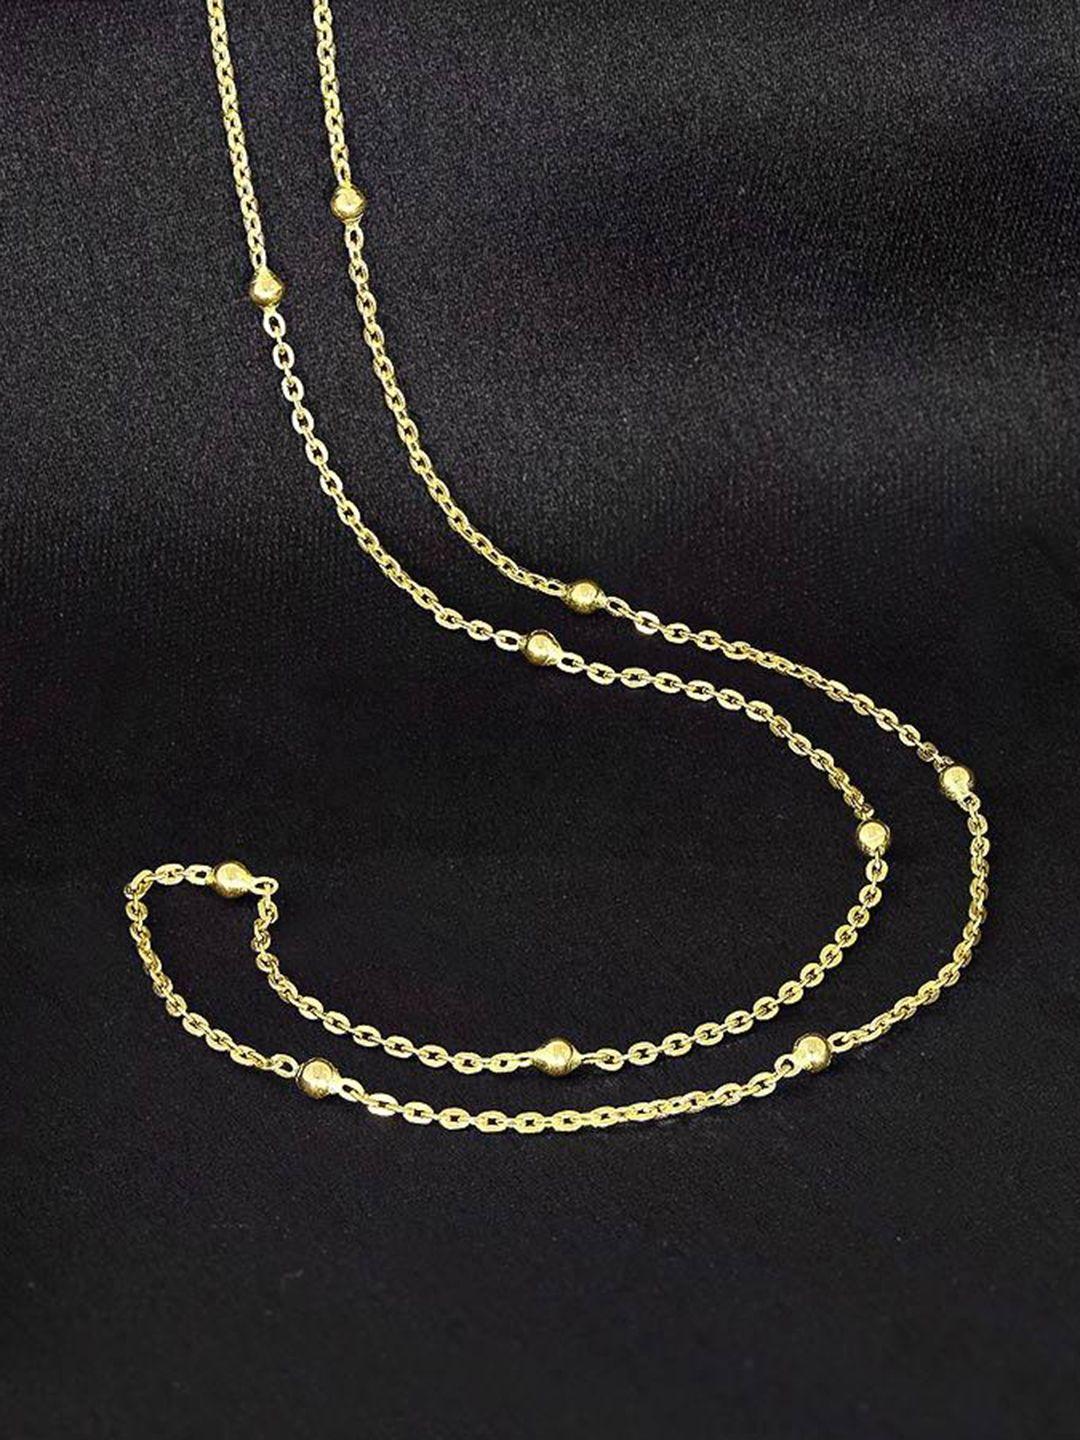 candere a kalyan jewellers company 22kt bis hallmark gold chain-3.1gm